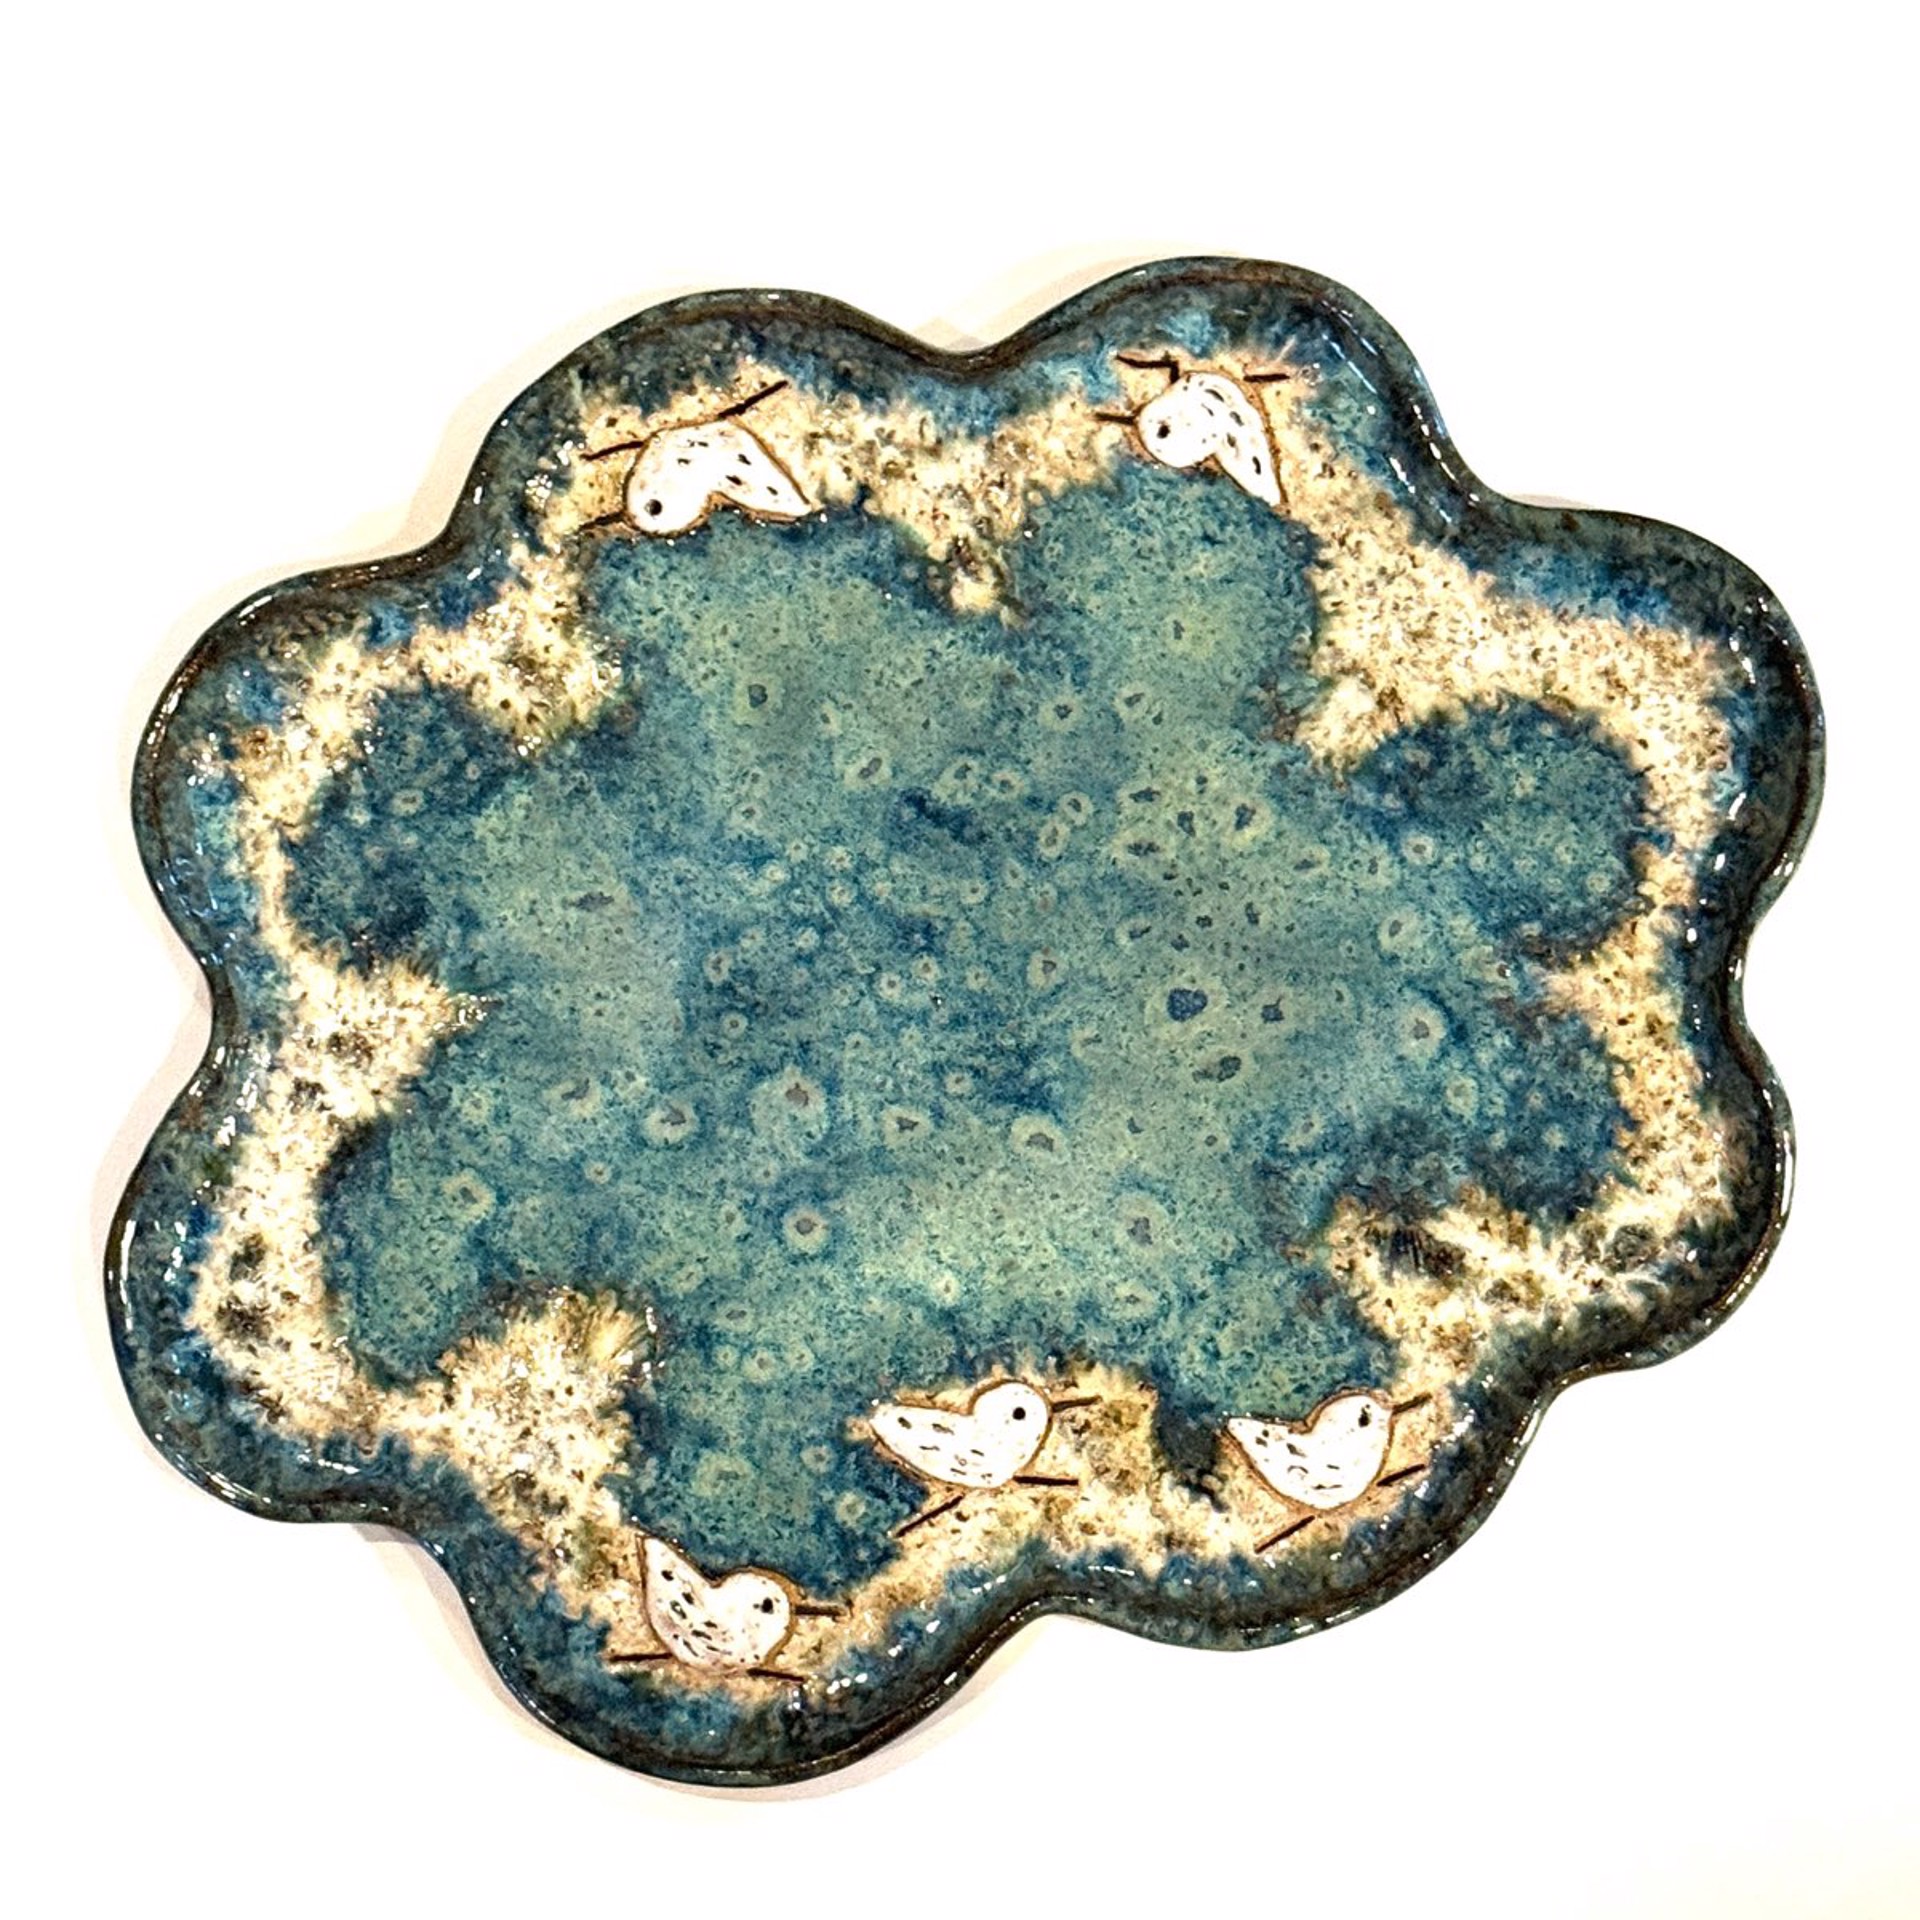 Platter with Five Sandpipers (Blue Glaze) LG23-1150 by Jim & Steffi Logan